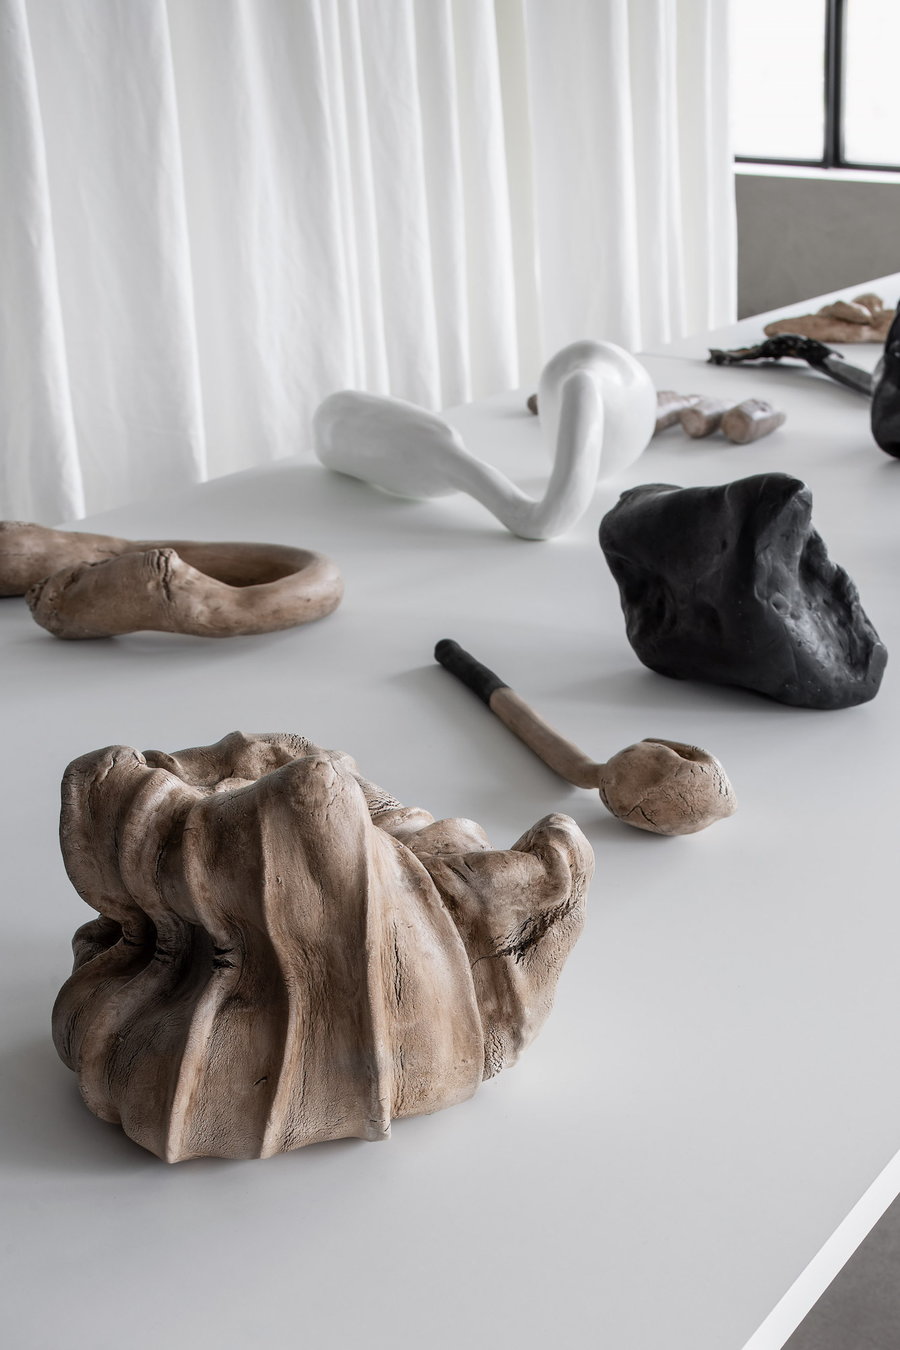 Sculptural ceramics from artist Åsa Stenerhag's 